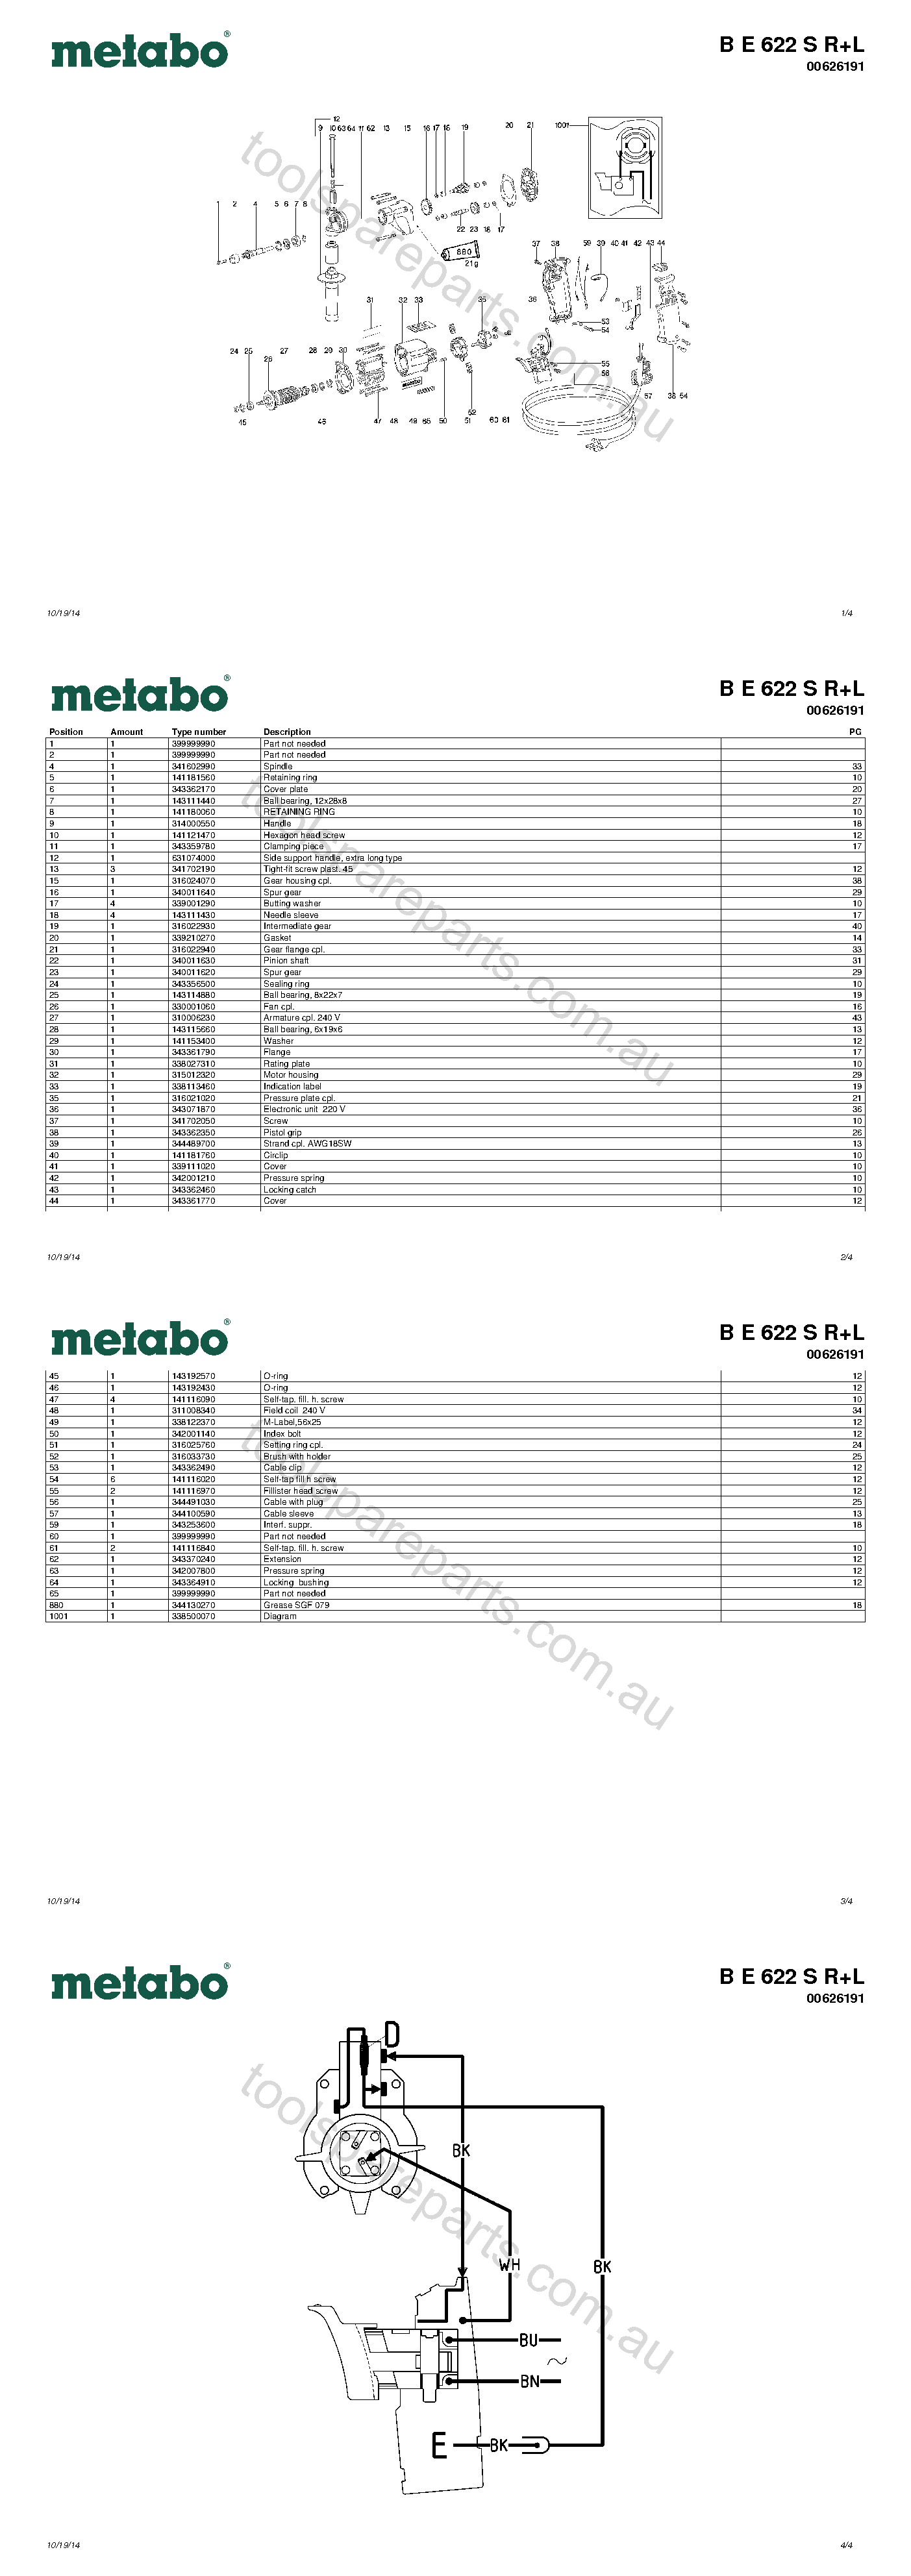 Metabo B E 622 S R+L 00626191  Diagram 1